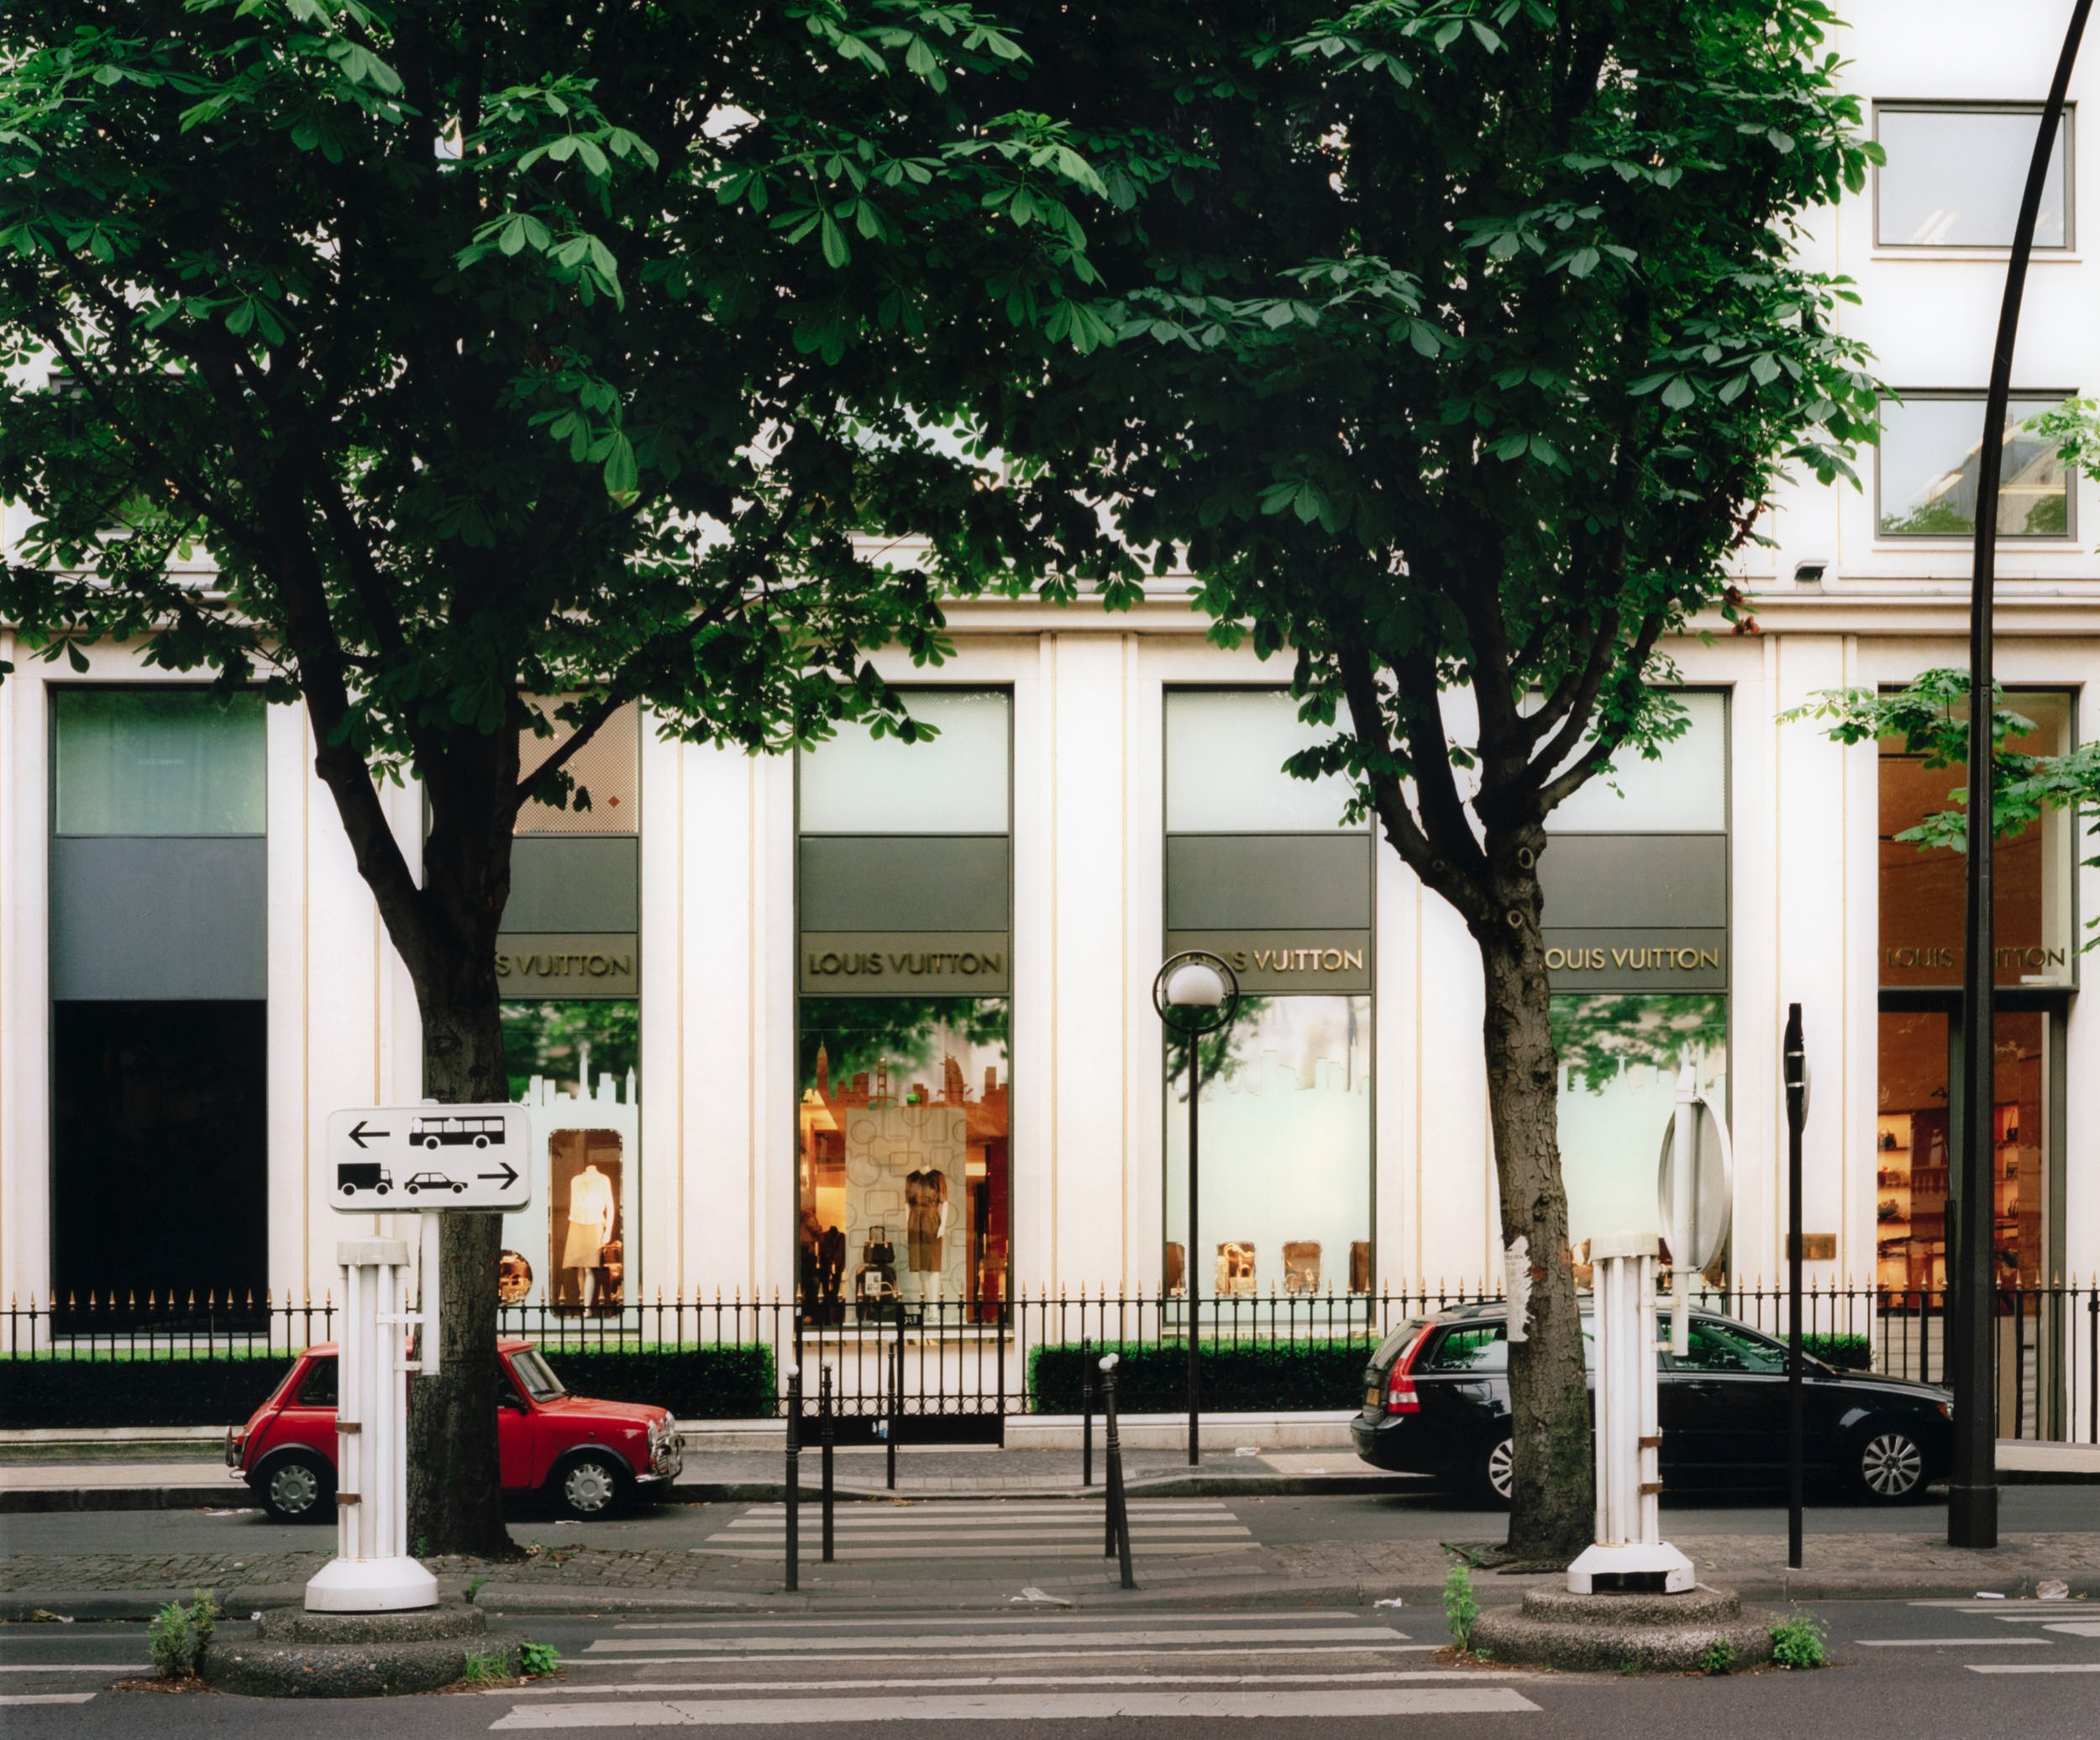 Ko Young Ae, Louis Vuitton Montaigne (Paris) (2007)